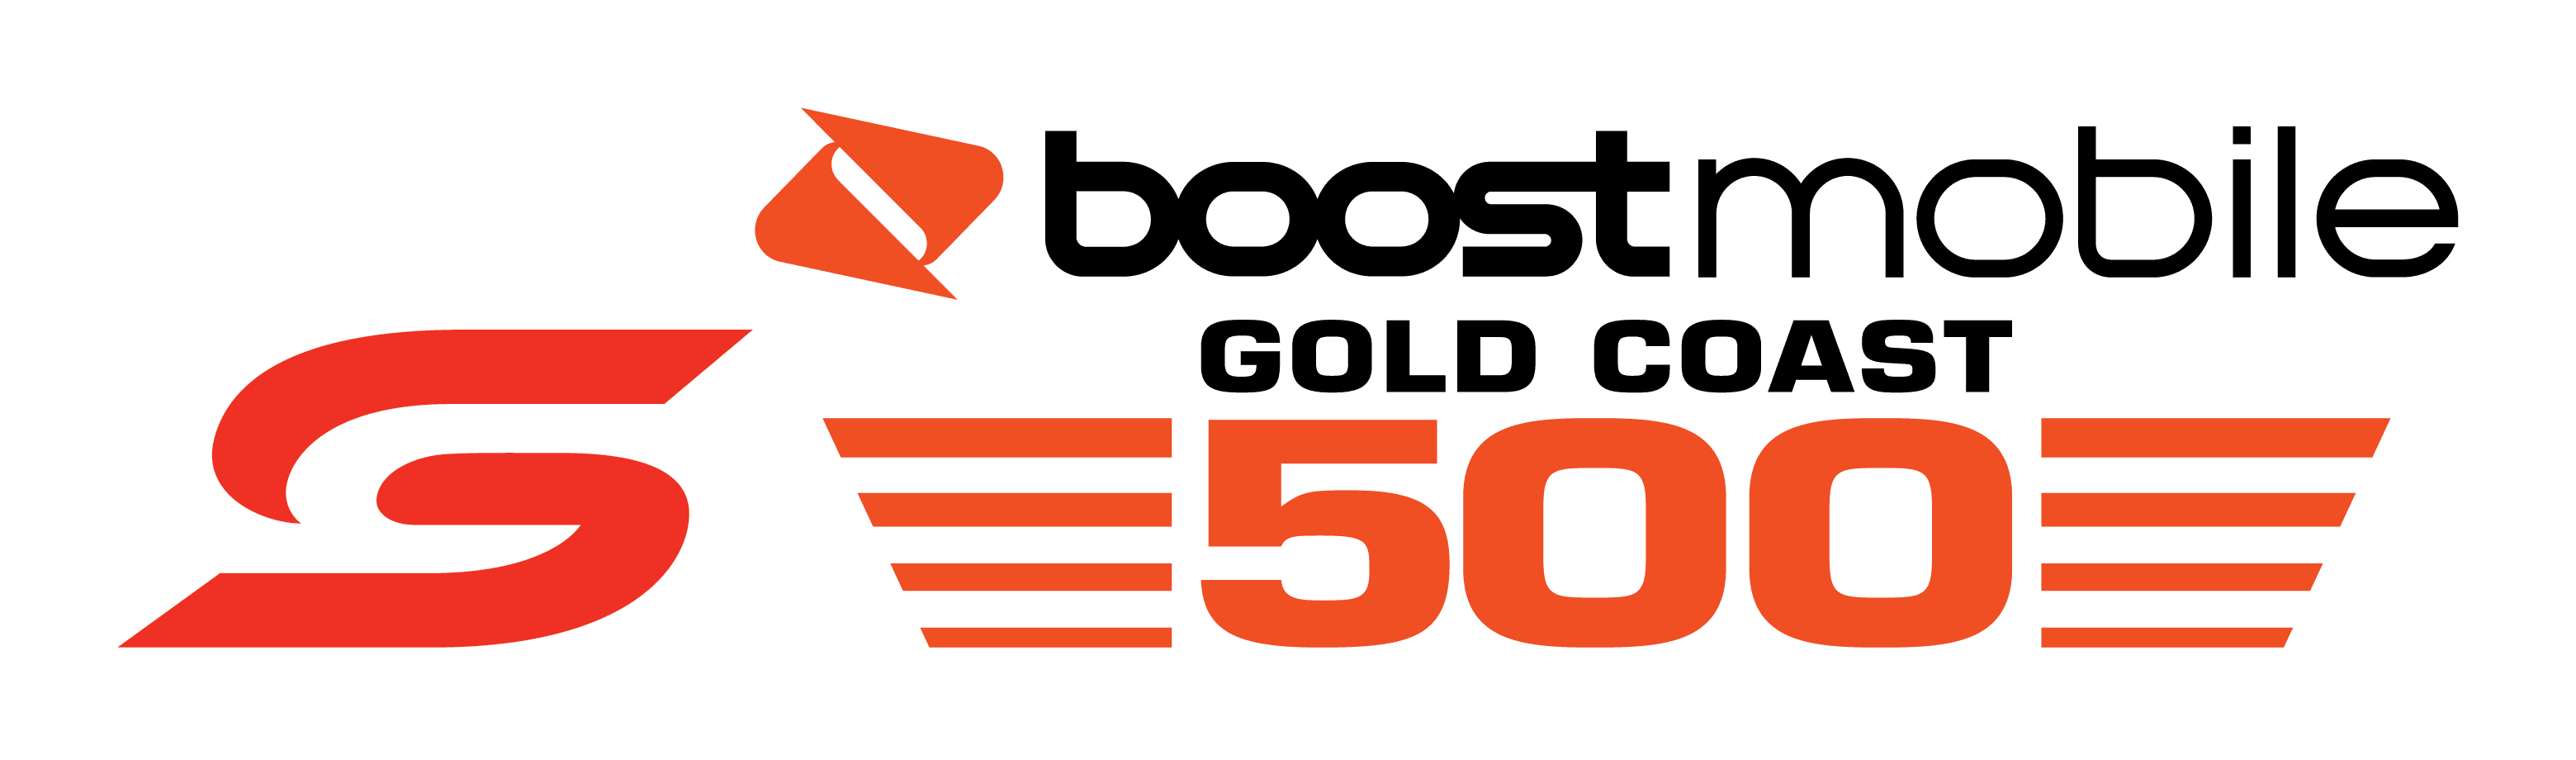 Boost Mobile Gold Coast 500